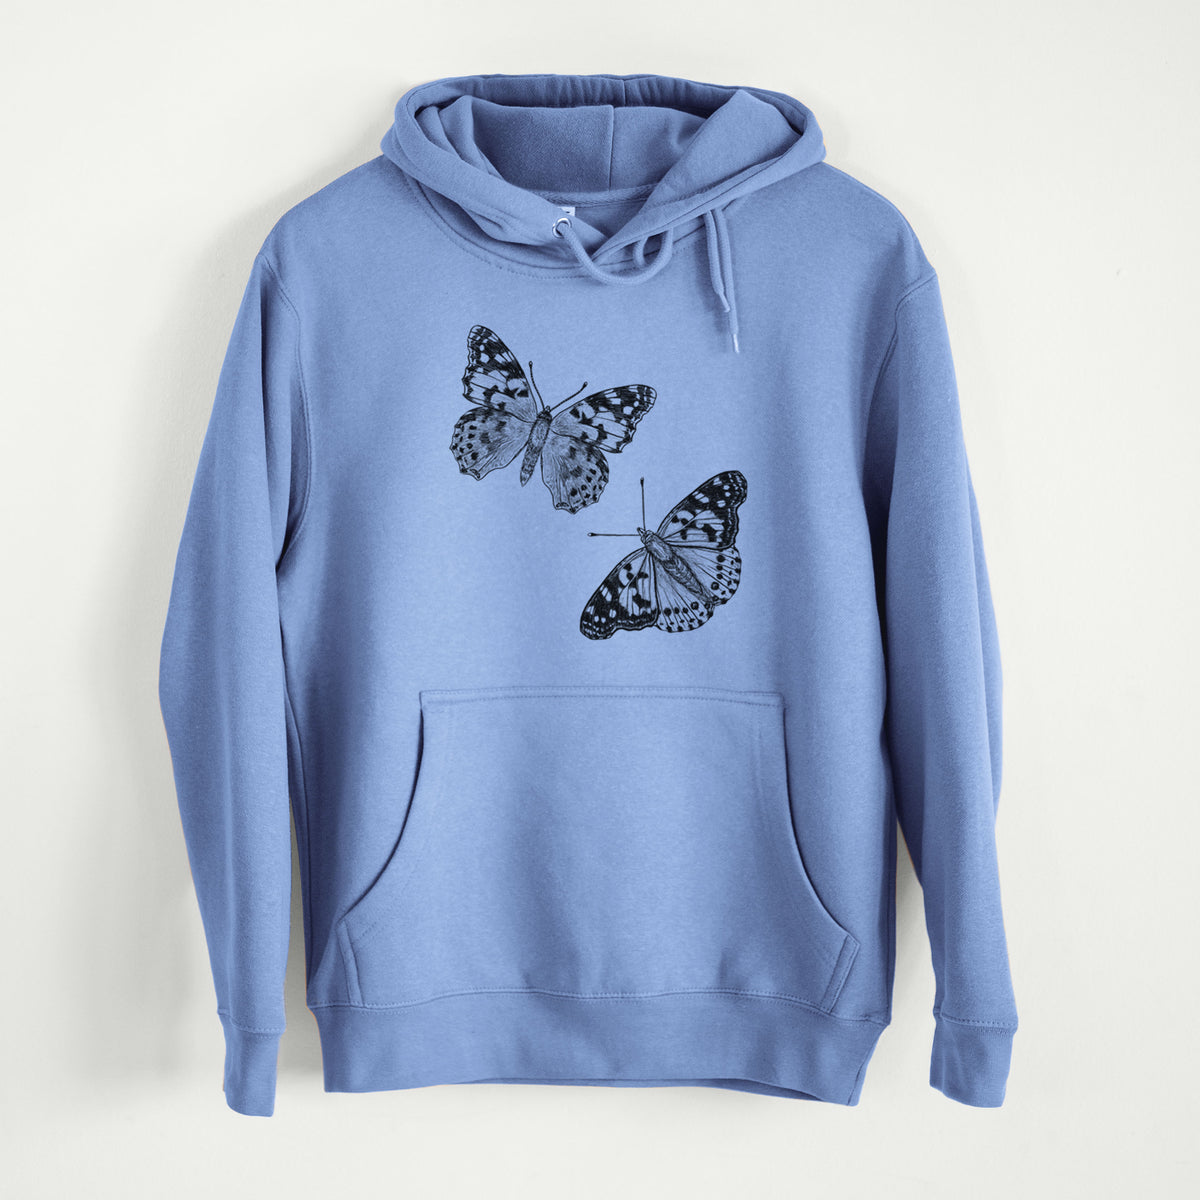 Painted Lady Butterflies  - Mid-Weight Unisex Premium Blend Hoodie